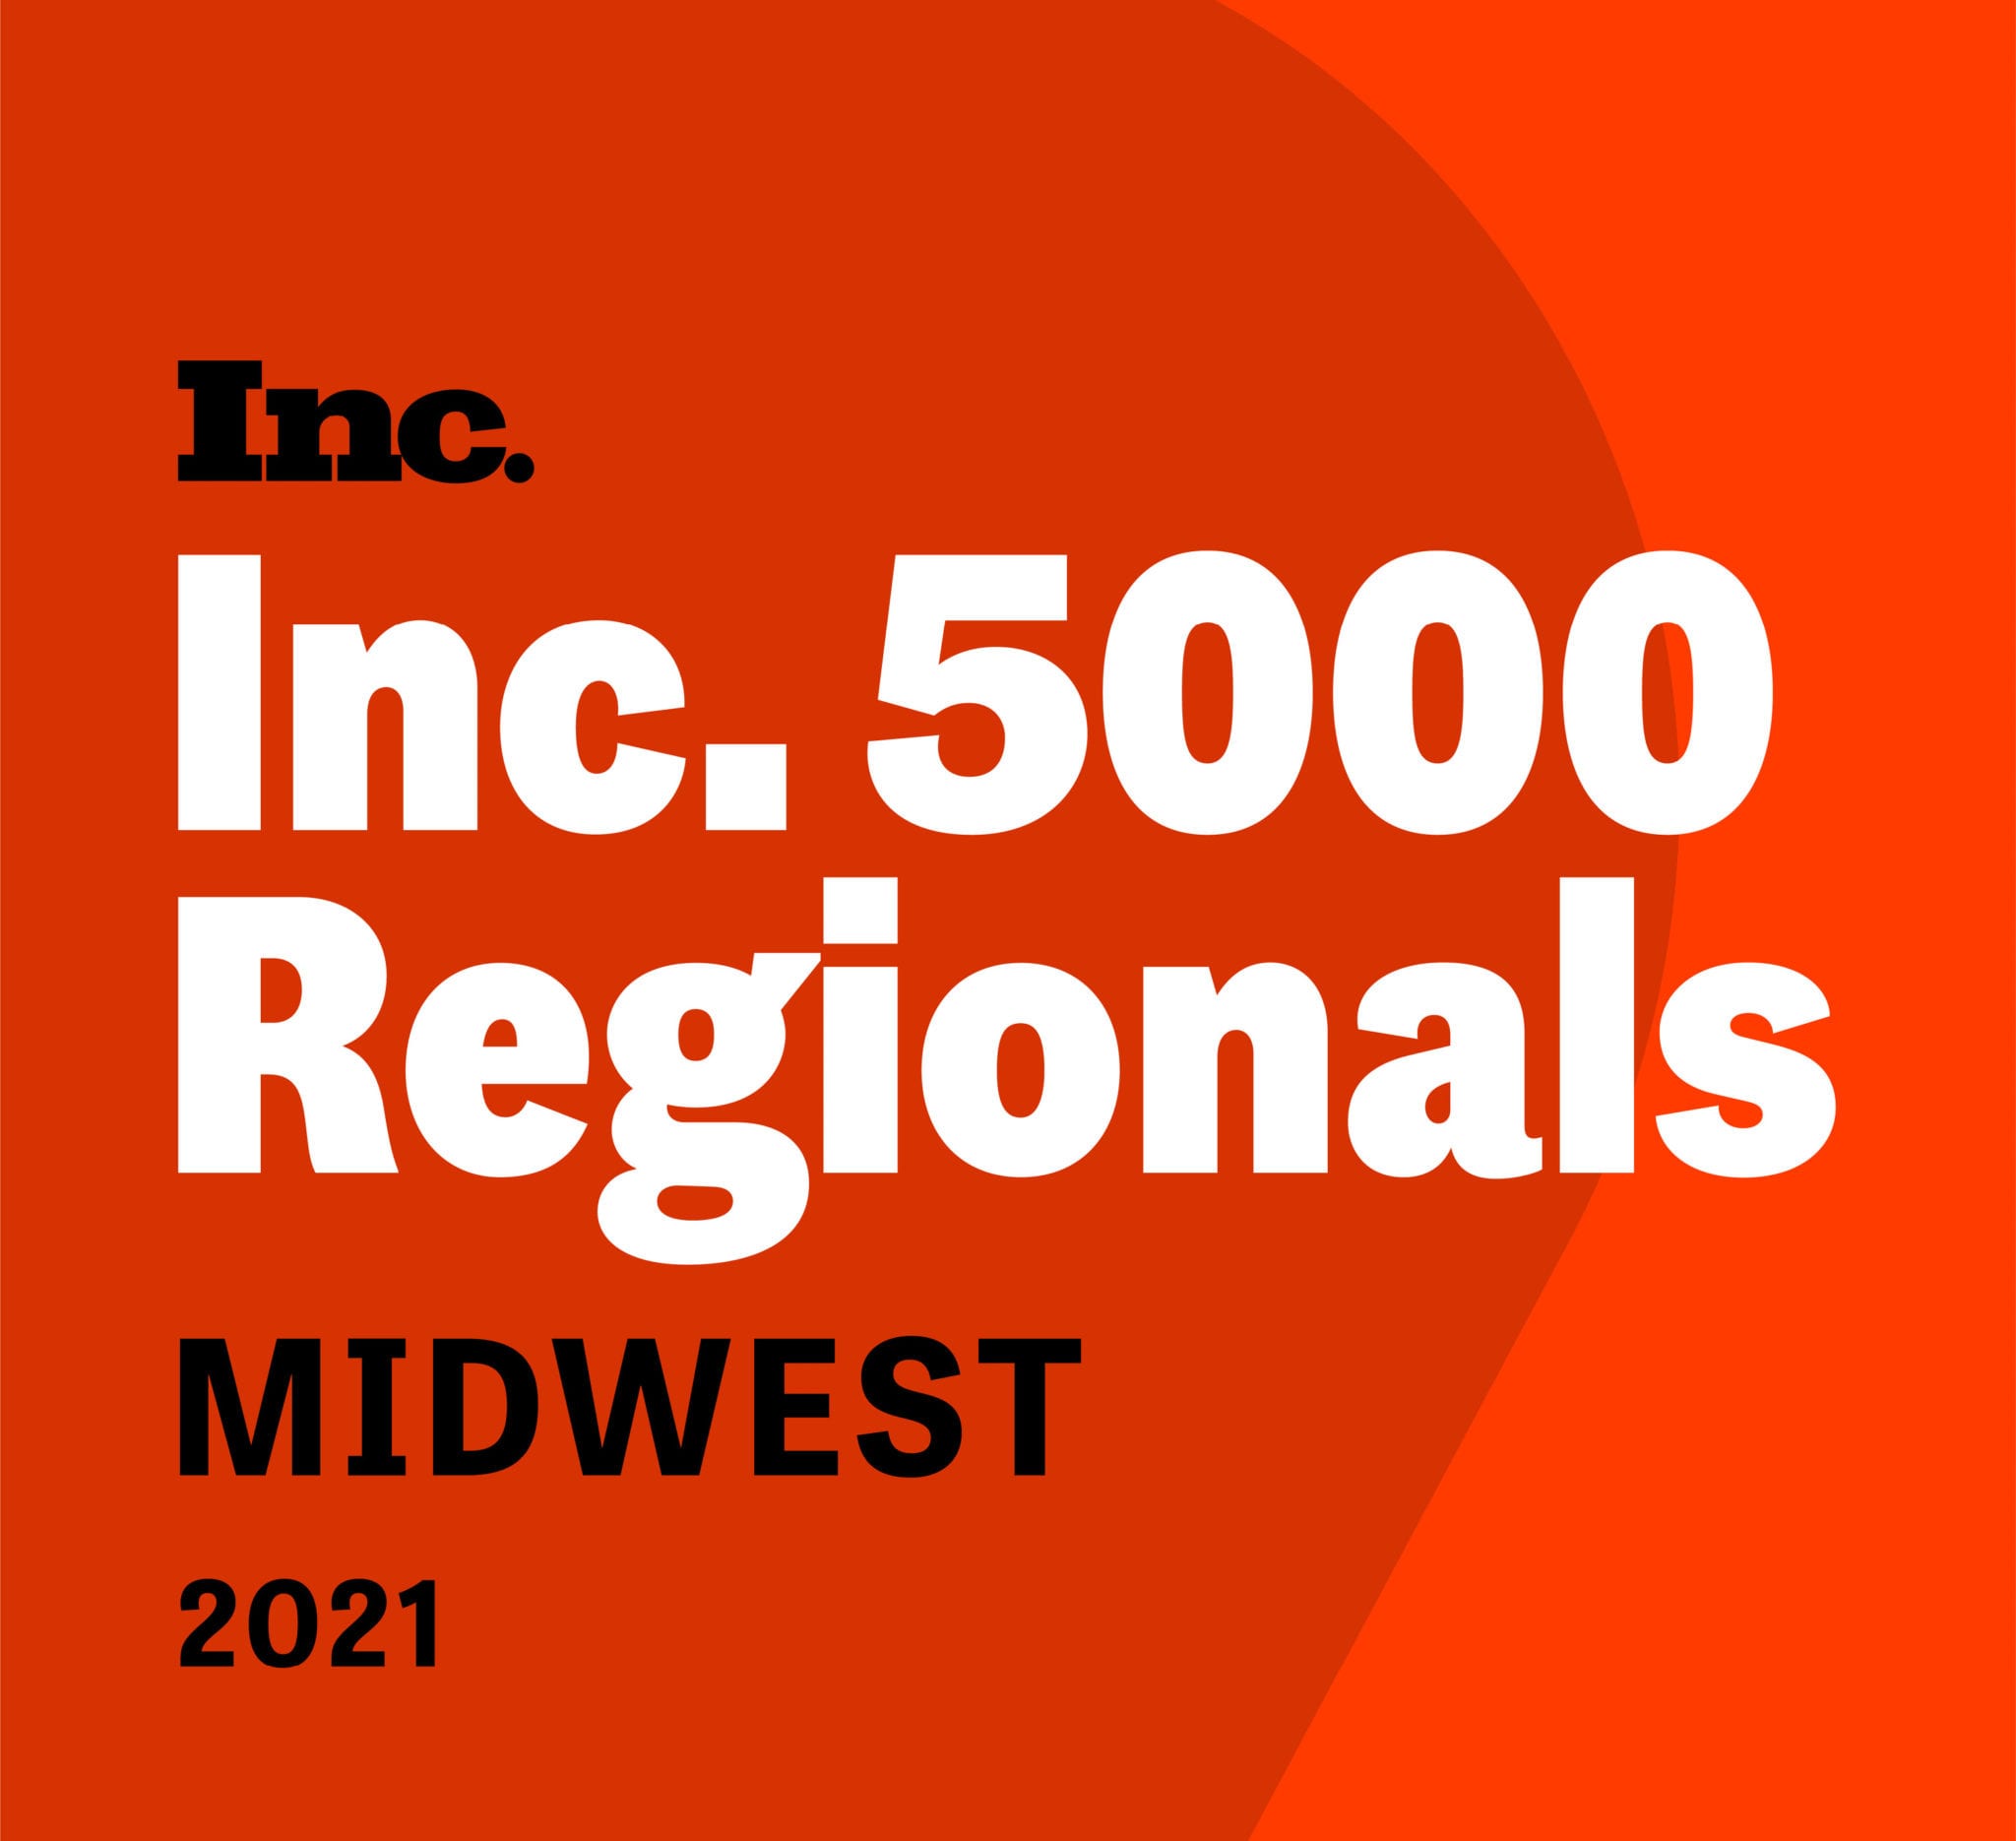 Inc 5000 Regionals Midwest Social Image website